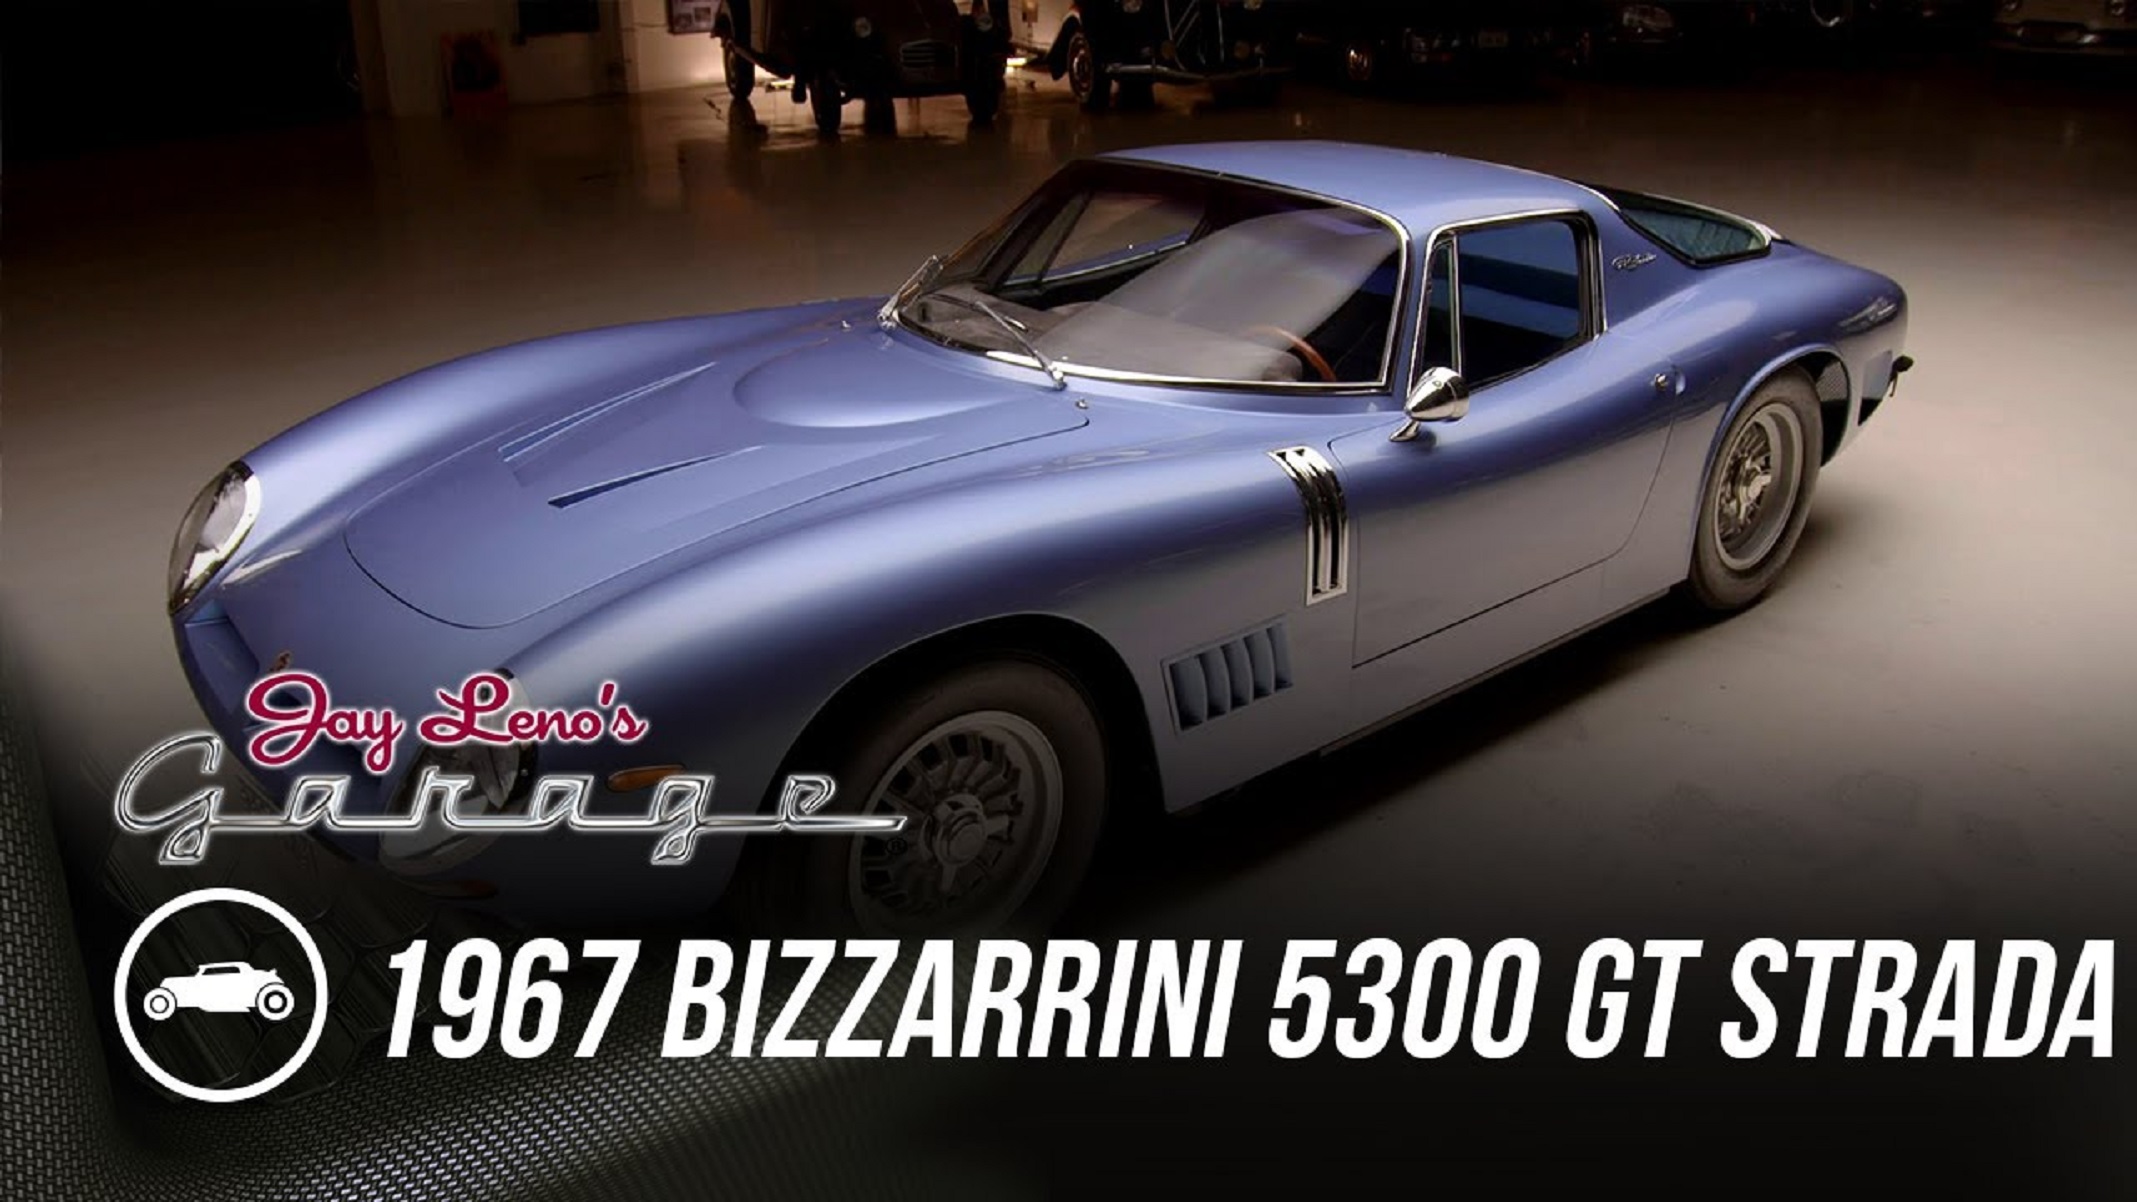 A blue 1967 Bizzarrini 5300 GT Strada in Jay Leno's garage